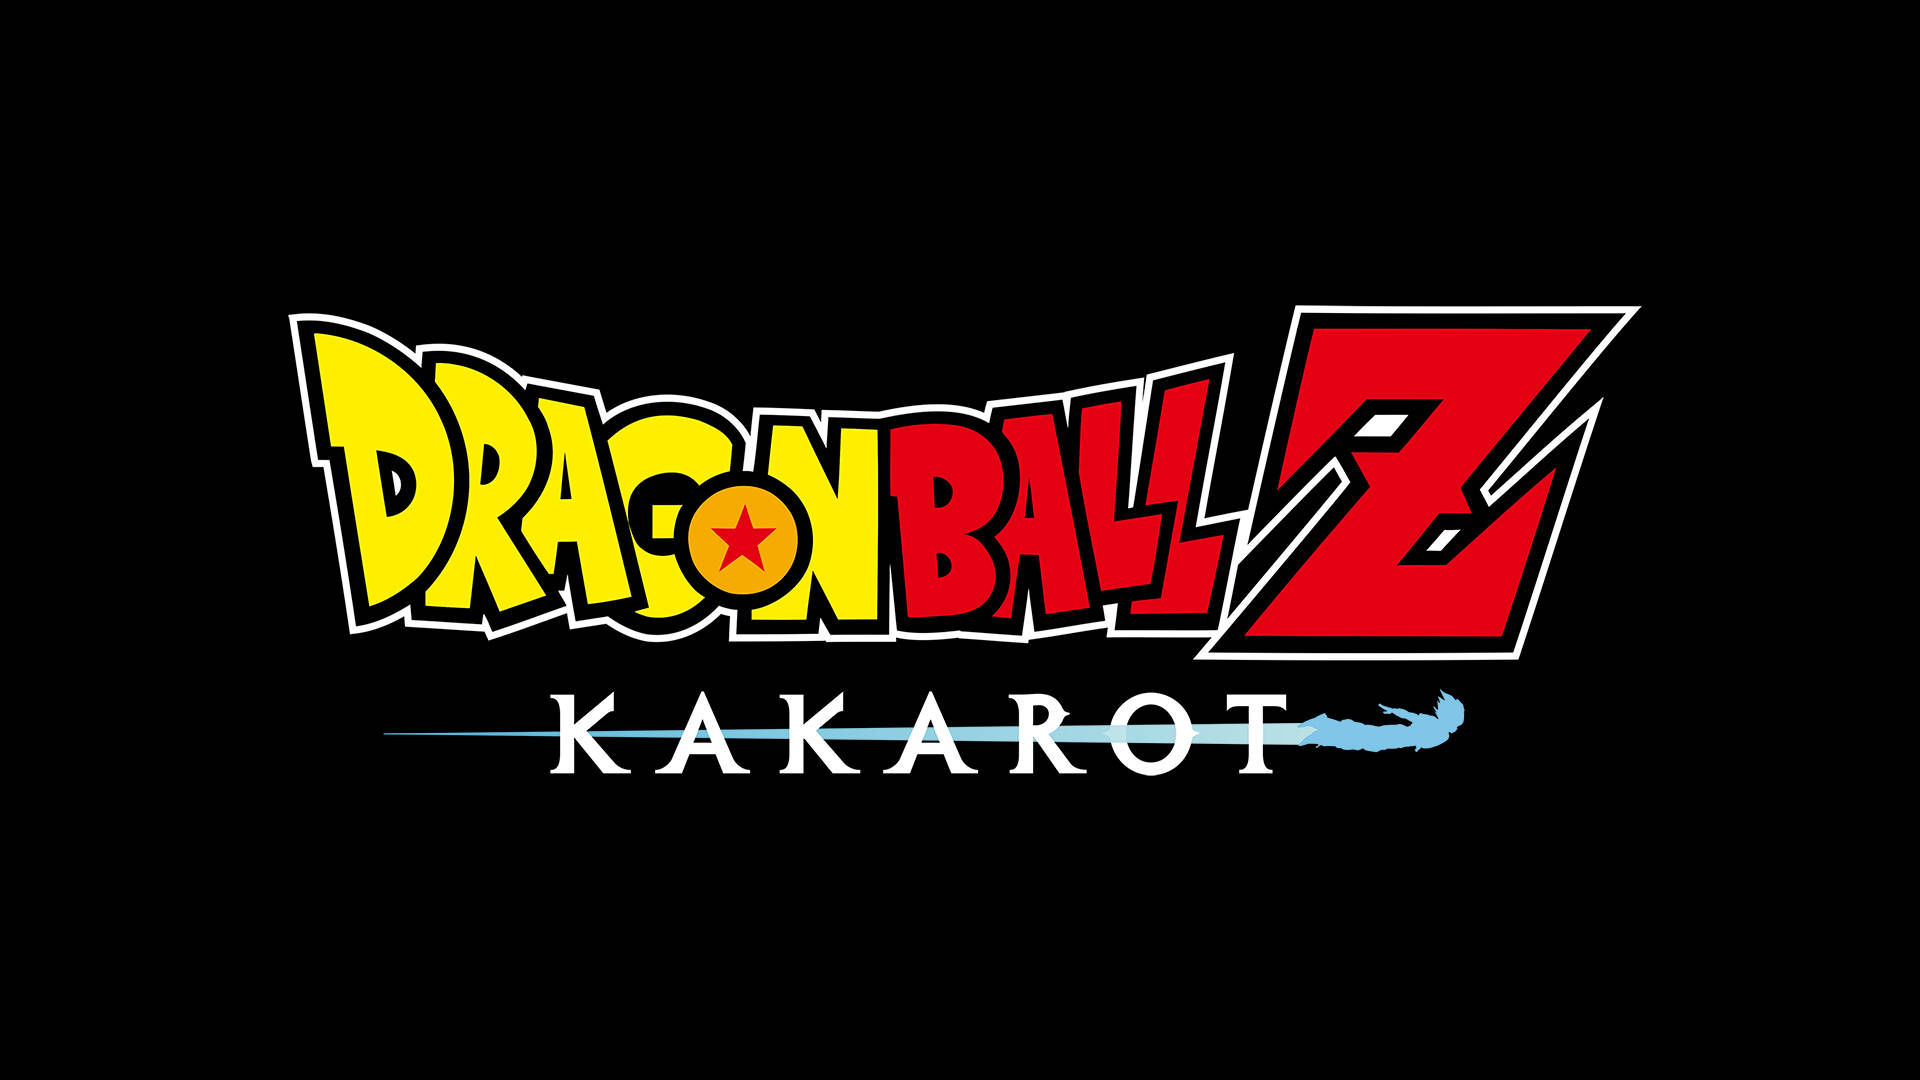 Dragonball Z Logotypen Kakarot. (note: 